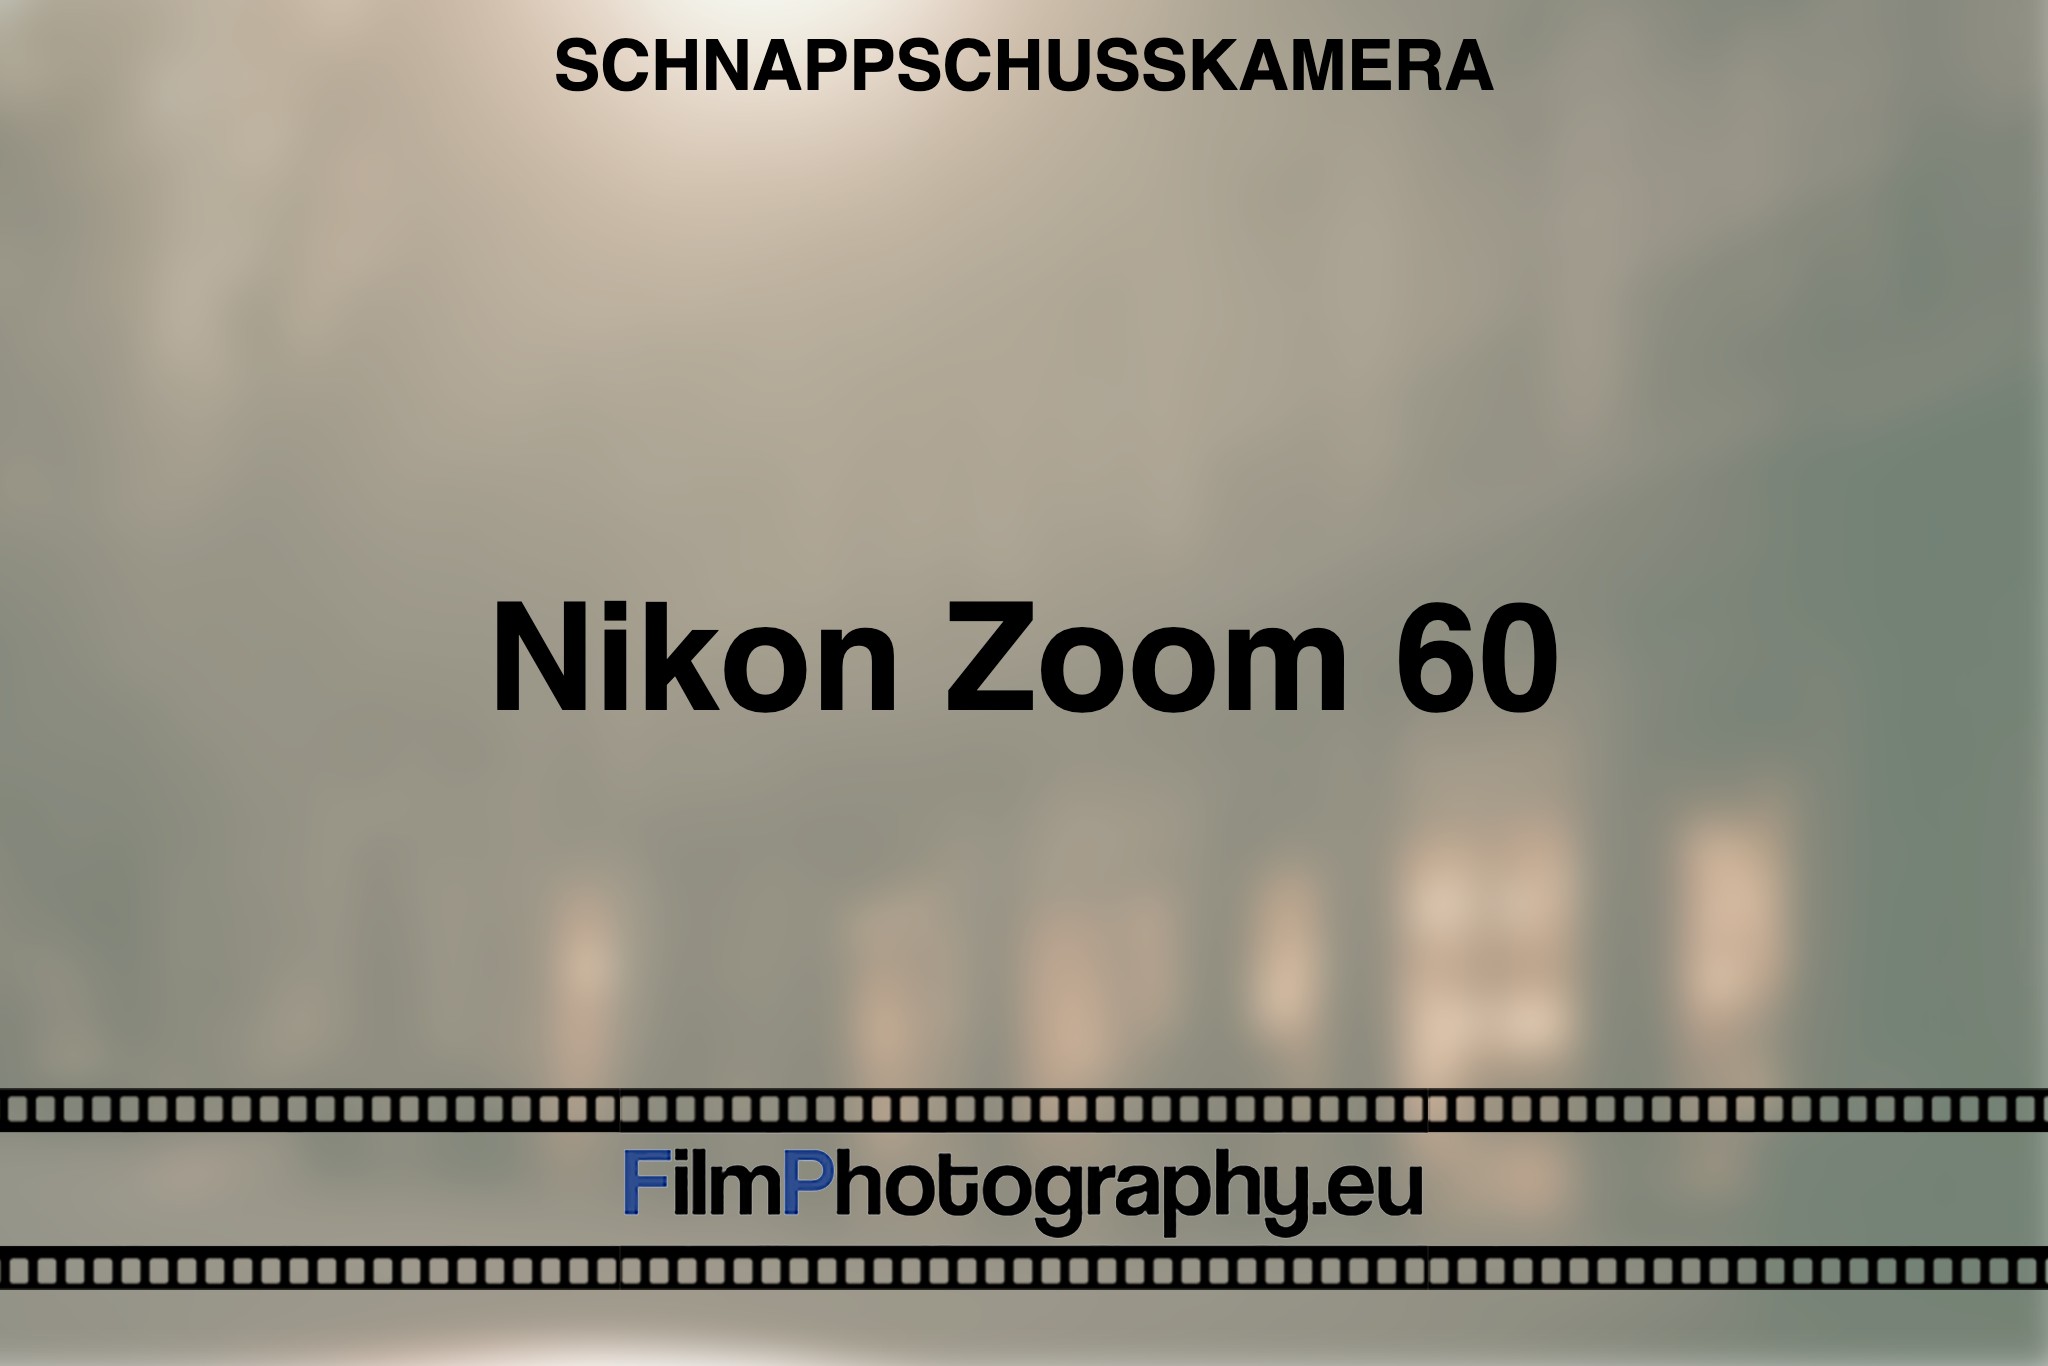 nikon-zoom-60-schnappschusskamera-bnv